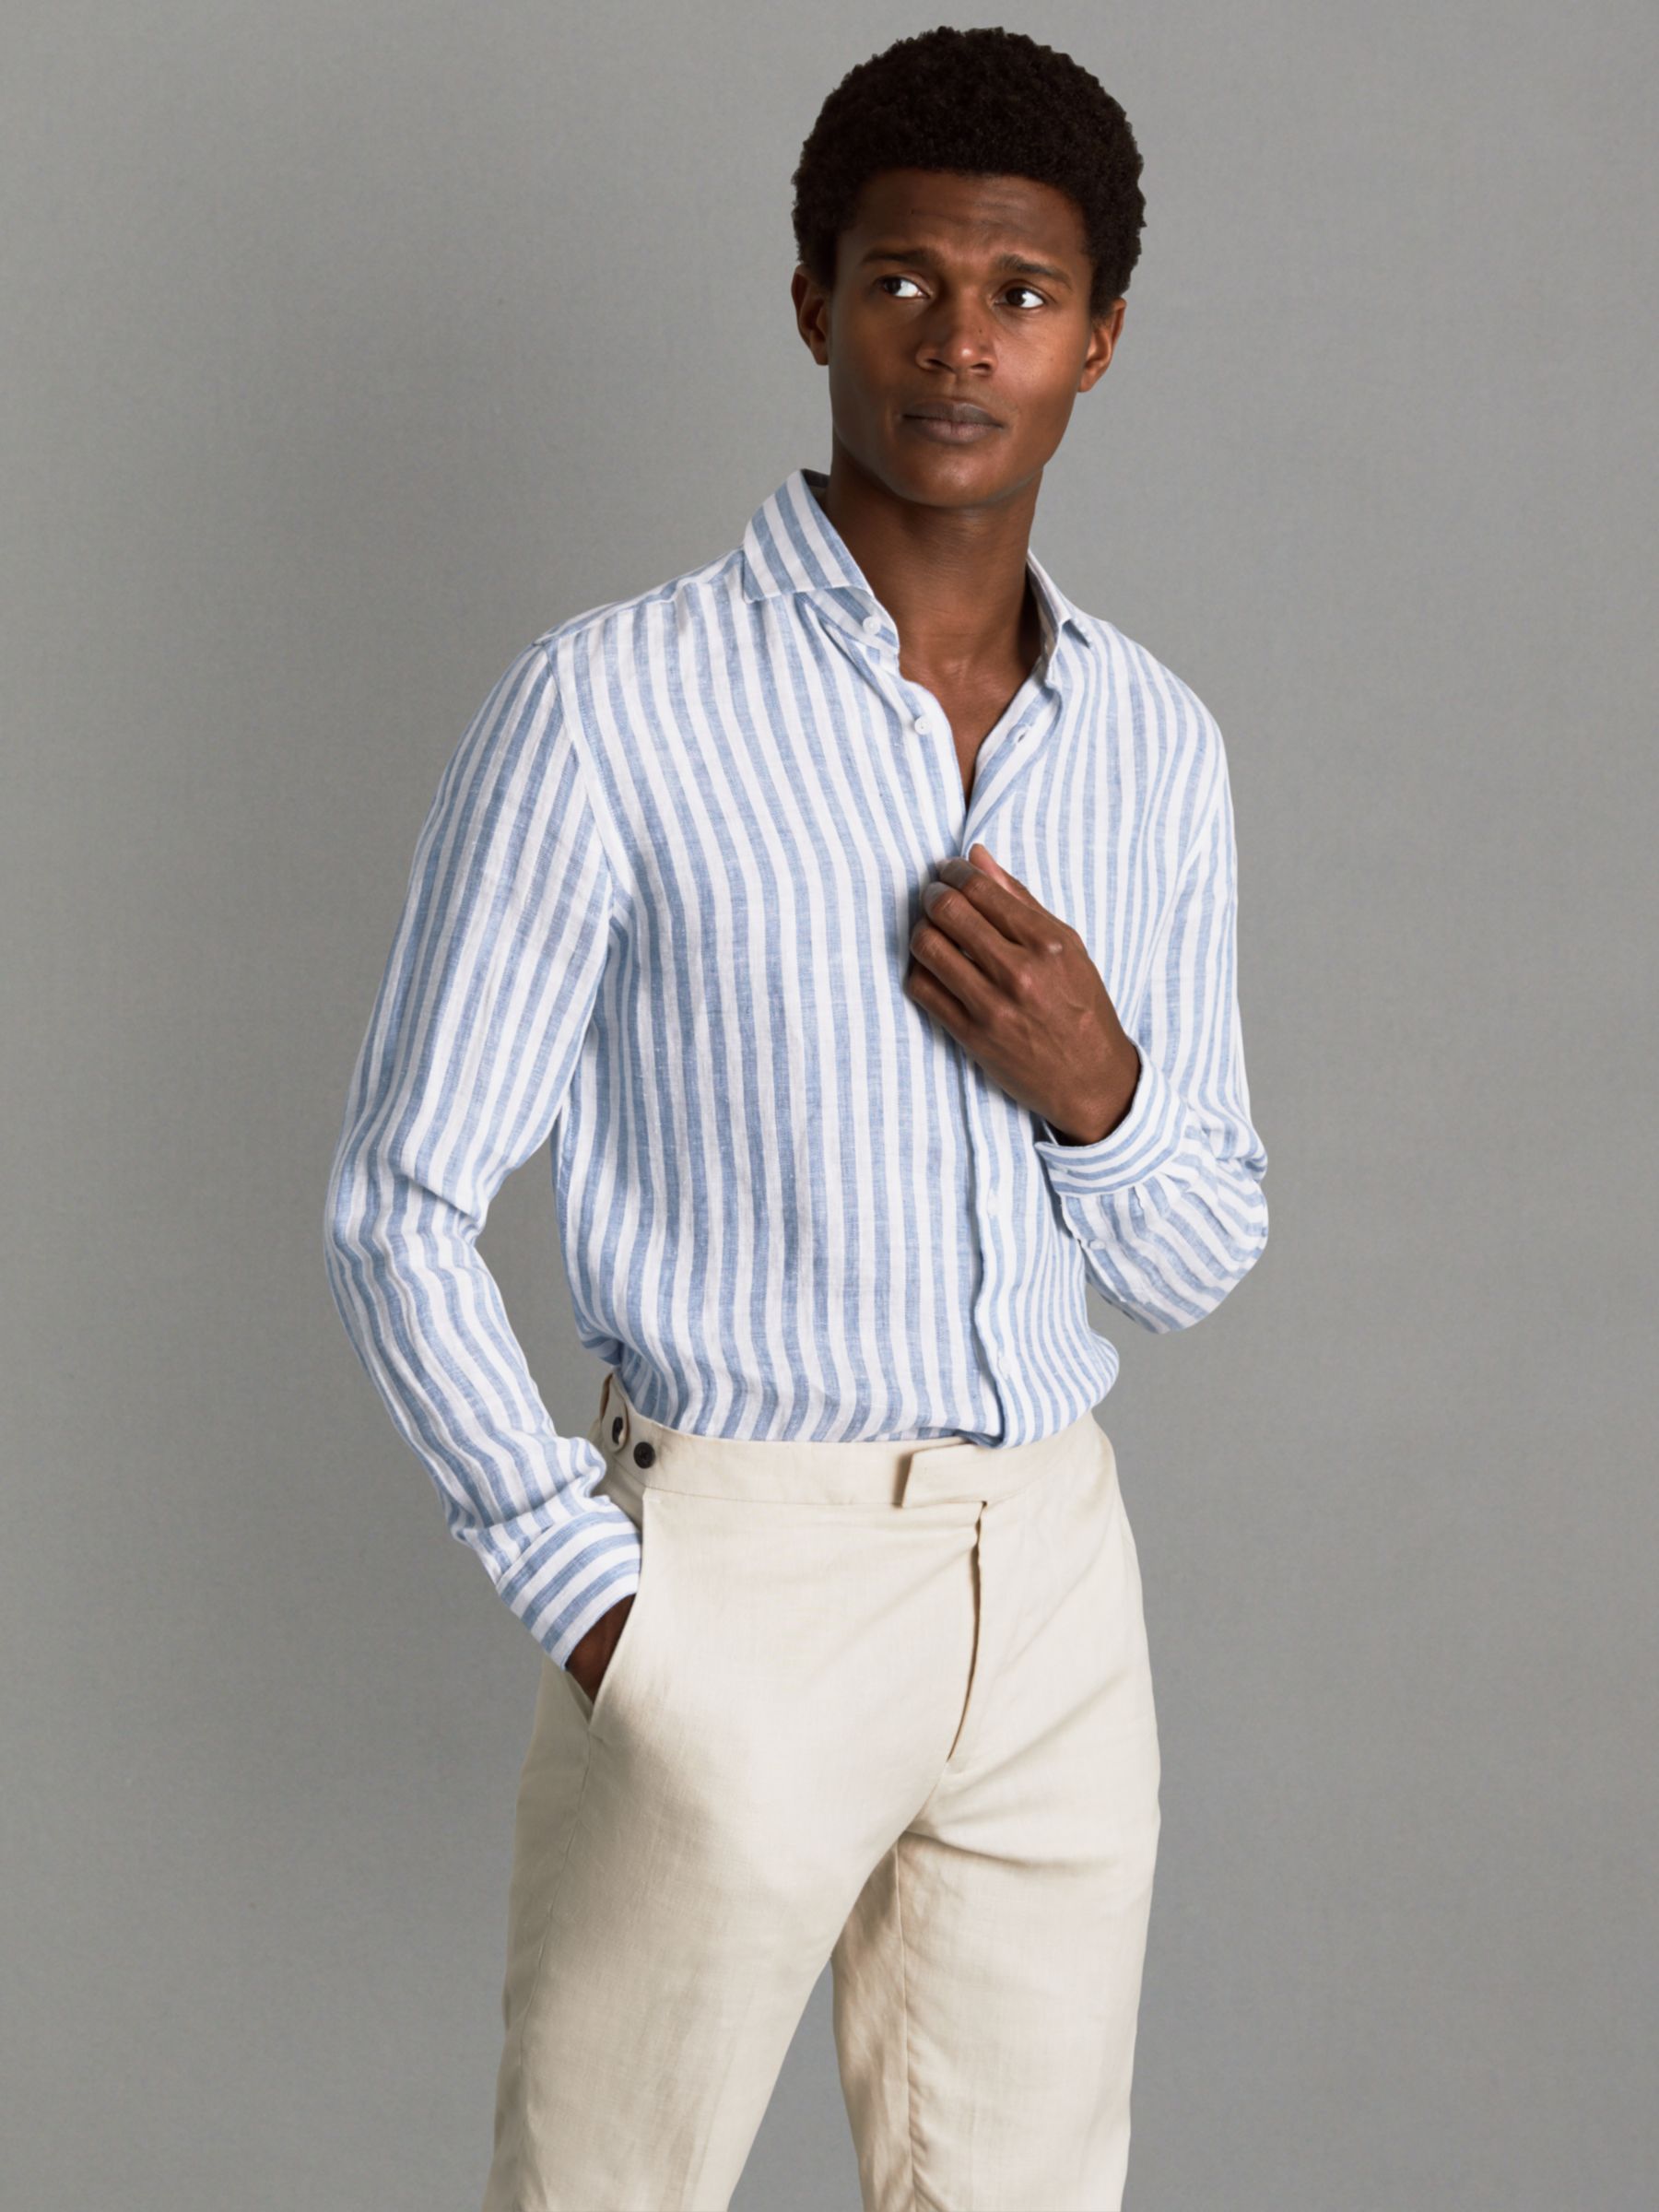 Buy Reiss Ruban Long Sleeve Linen Stripe Shirt, Blue/White Online at johnlewis.com